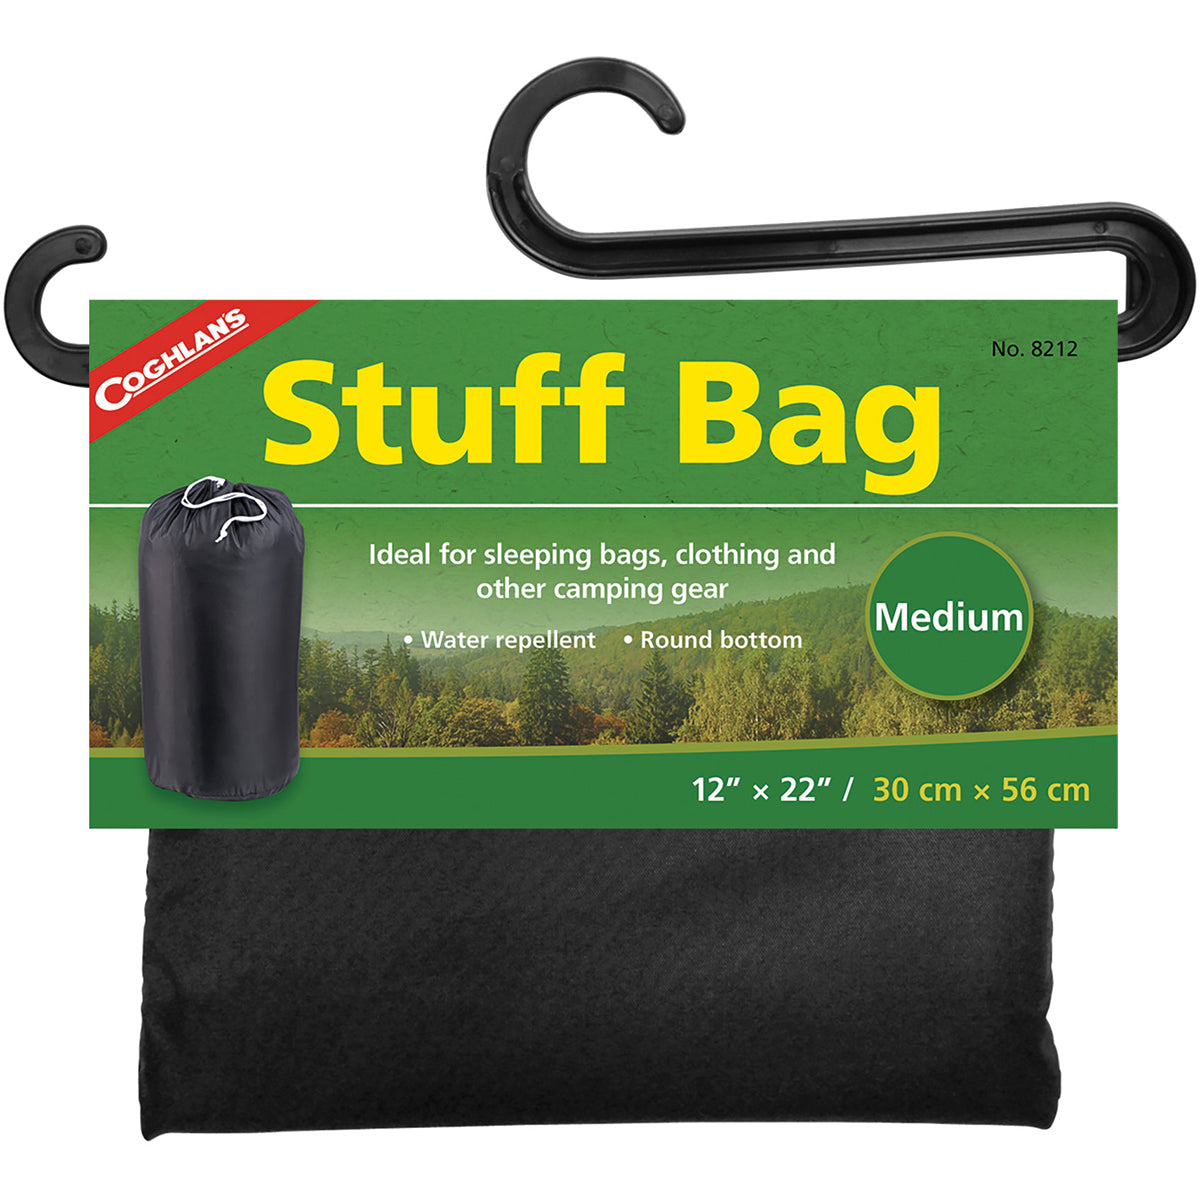 Coghlan's Stuff Bag, 12" x 22", Sack Pouch Sleeping Camping Clothing Storage Coghlan's